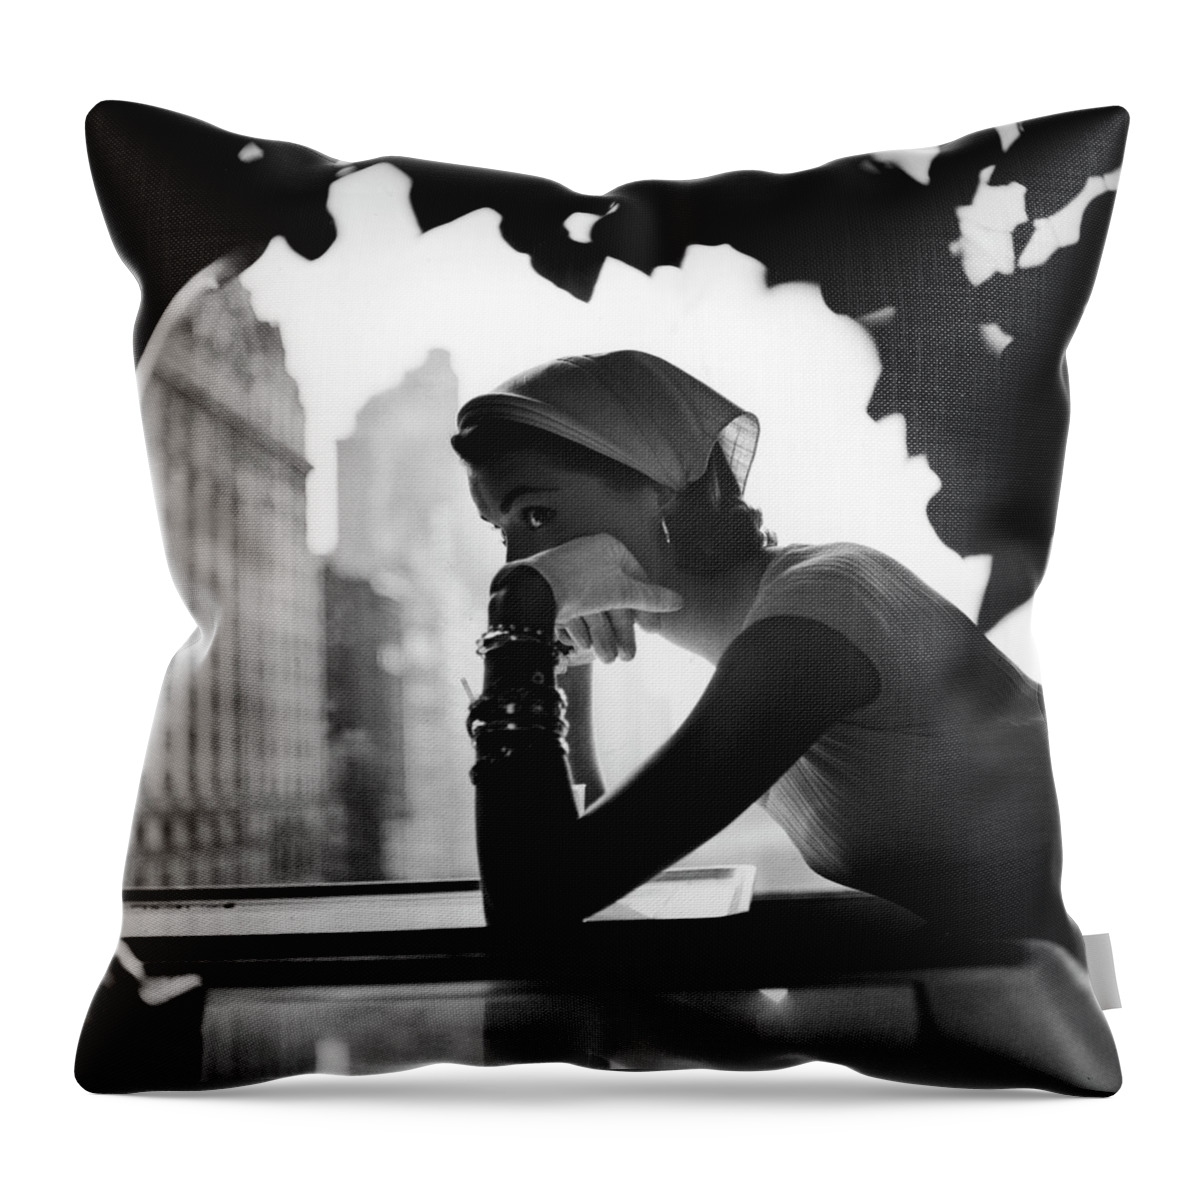 Kerchiefs Throw Pillow featuring the photograph Lilly Dache Design by Gordon Parks